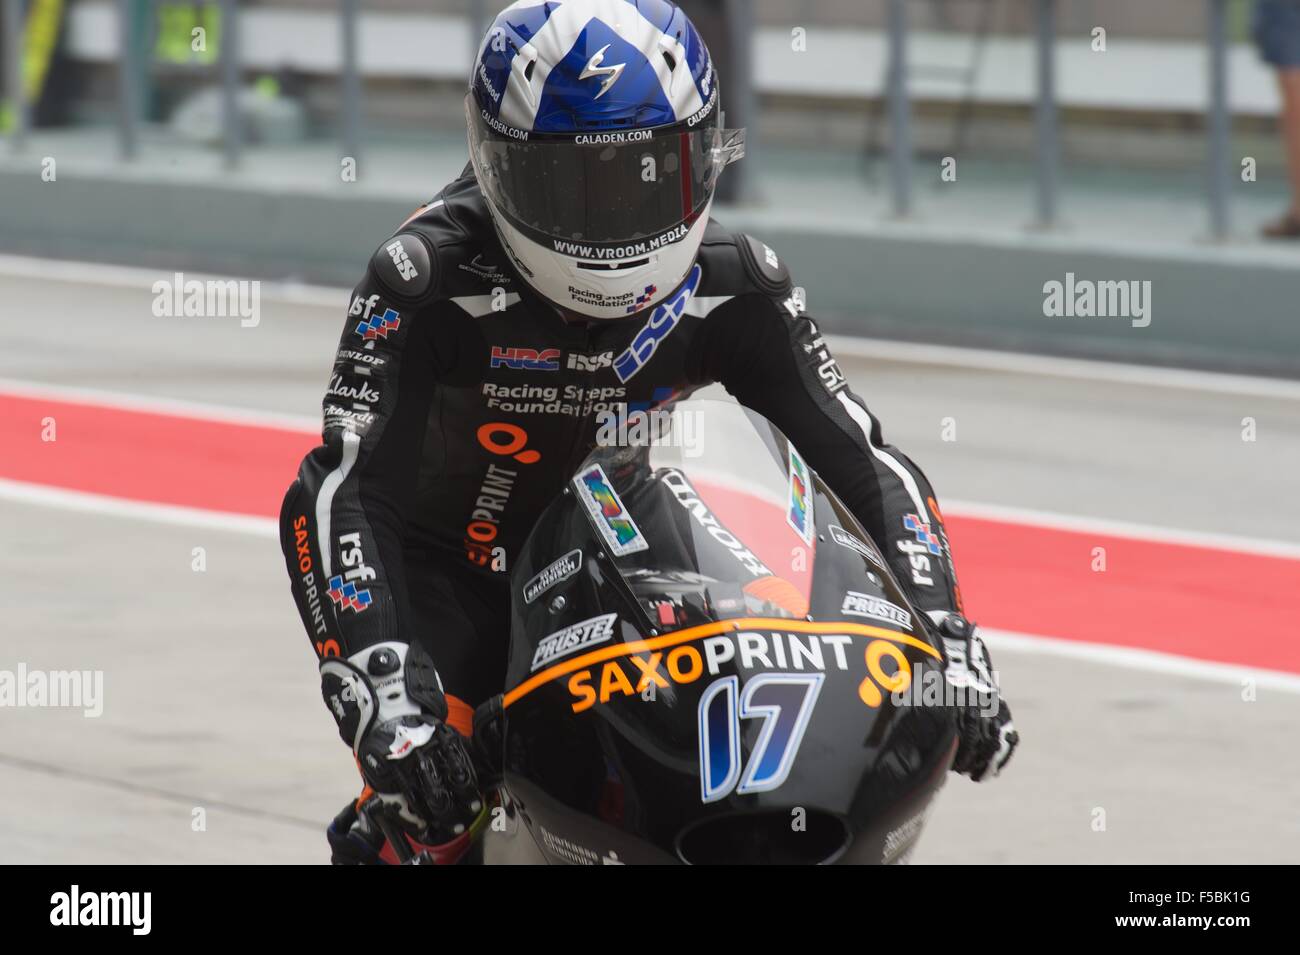 Sepang Circuit, Malaysia. 24. Oktober 2015. Schottische Moto3 Fahrer John McPhee fahren in der Boxengasse im qualifying für das Moto Stockfoto